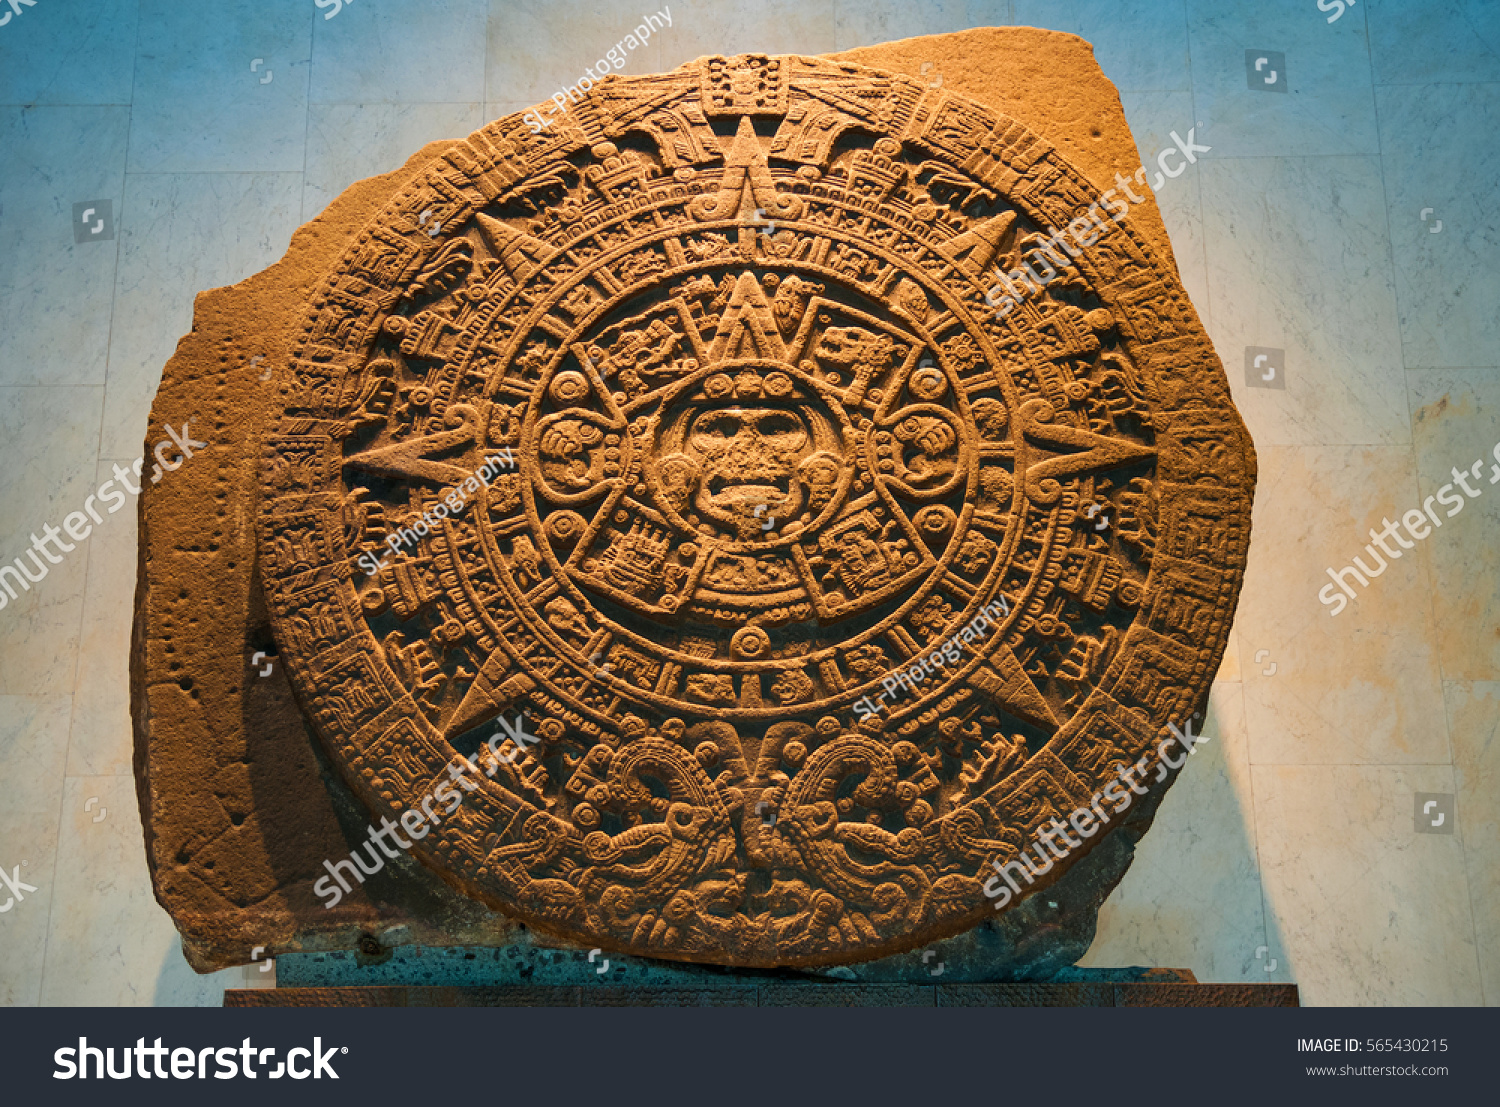 Inca calendar Images, Stock Photos & Vectors Shutterstock